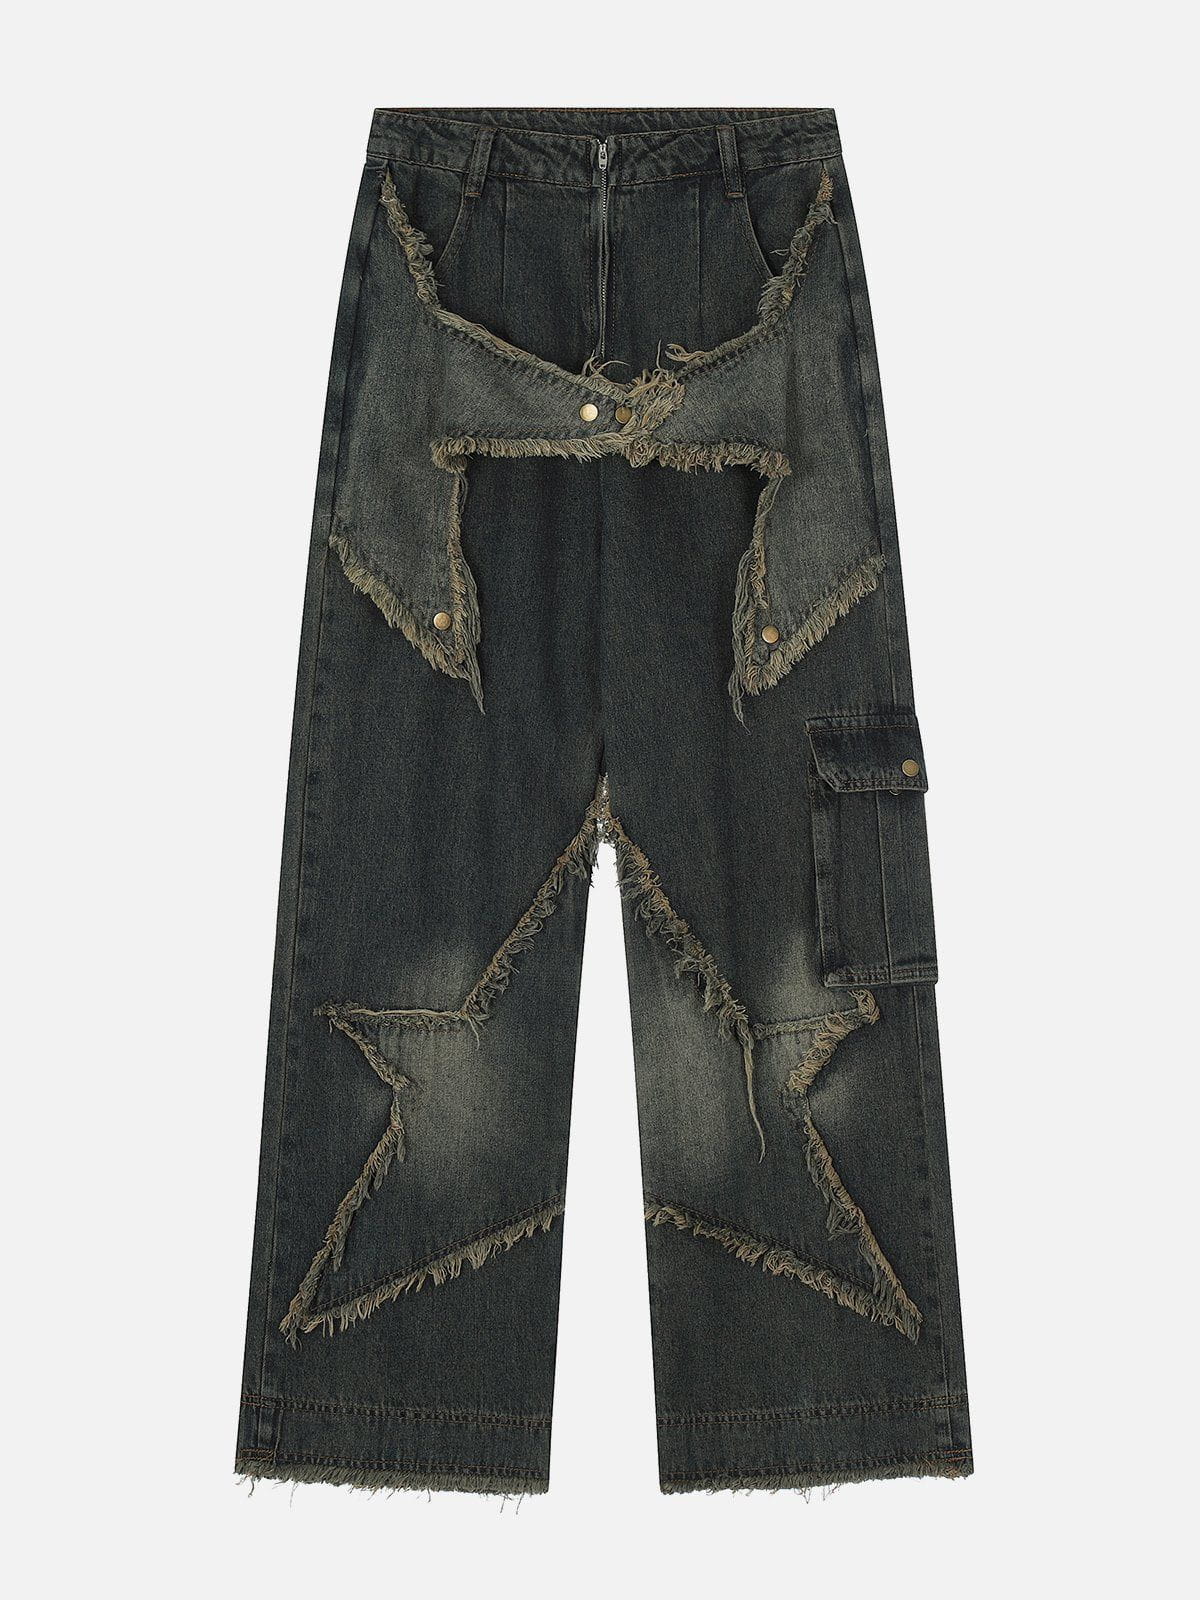 Majesda® - Star Jeans outfit ideas streetwear fashion